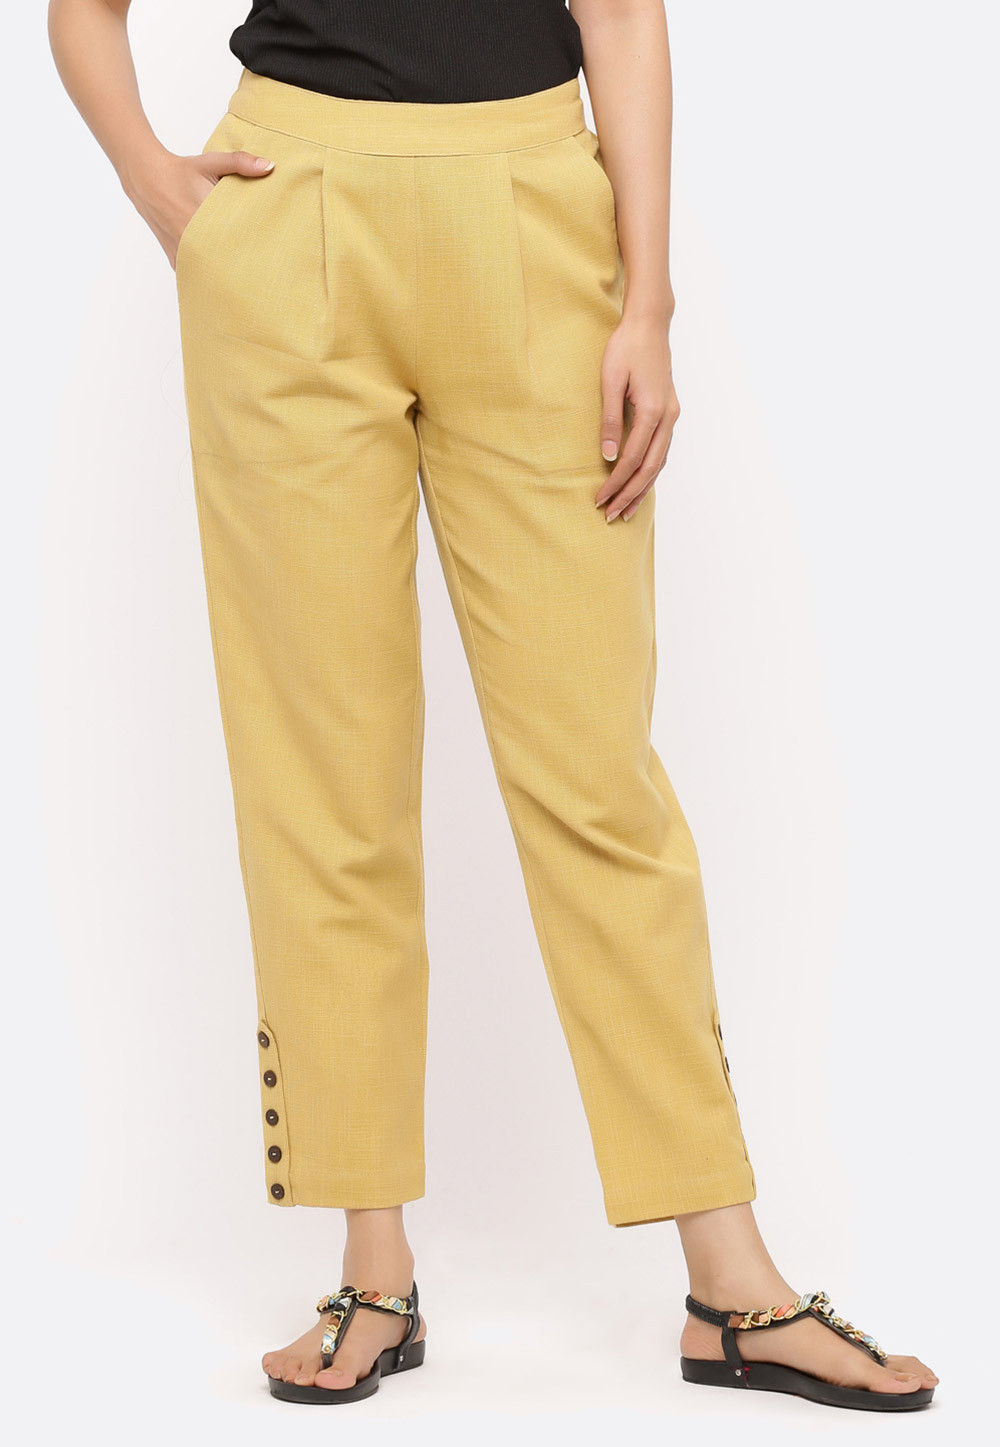 Buy Solid Color Cotton Pant in Beige Online : BMX69 - Utsav Fashion